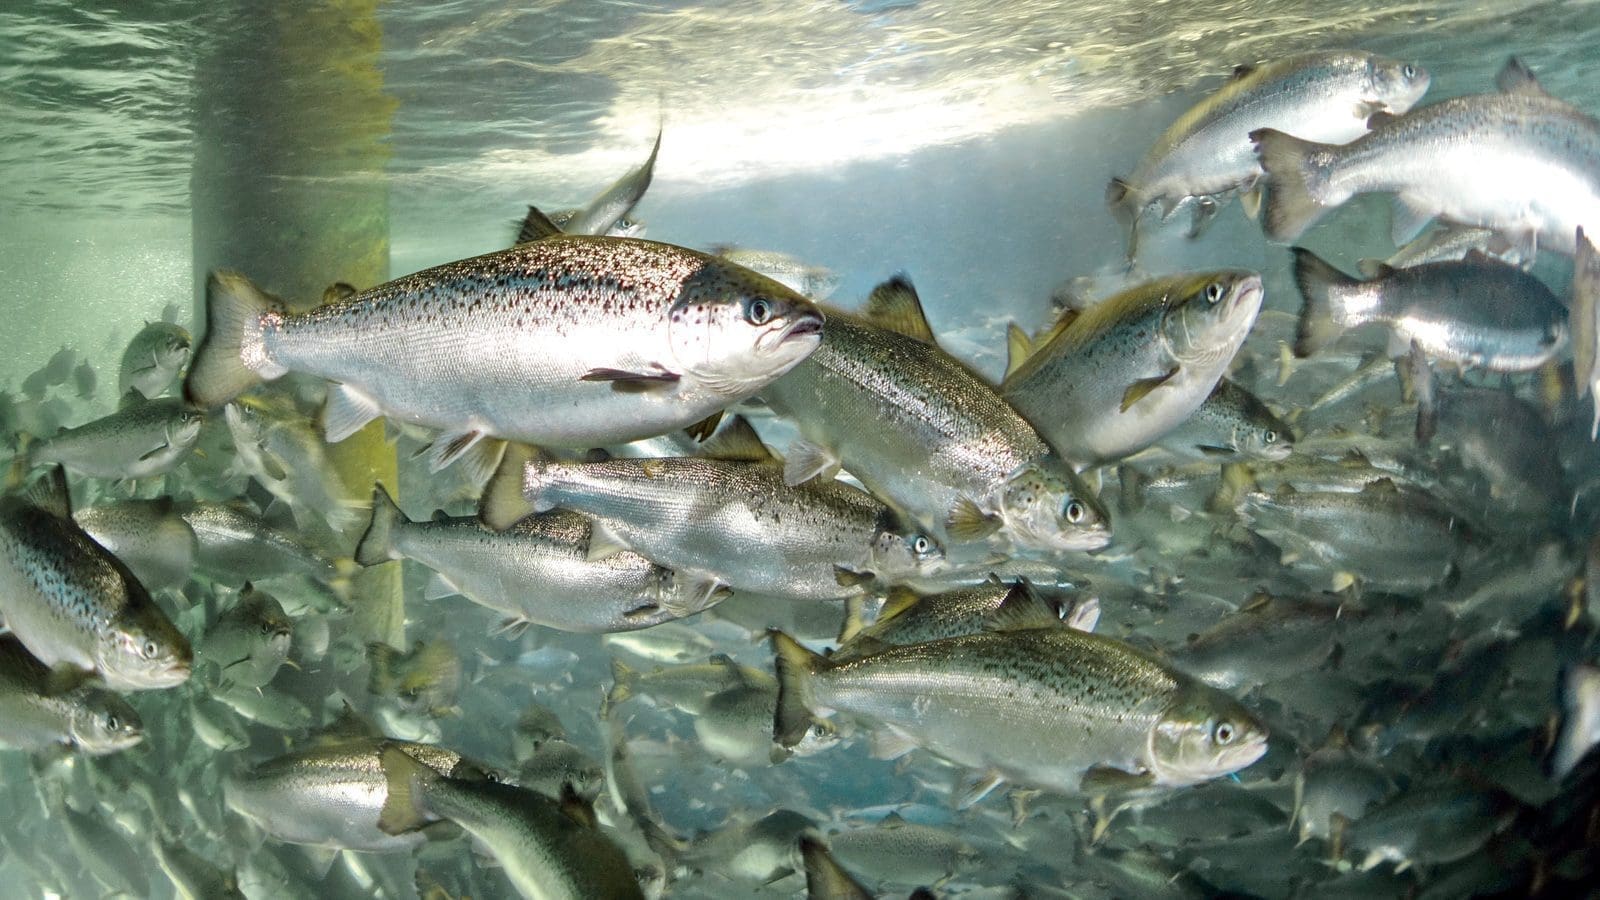 Andfjord Salmon, Skretting, Zooca partner on plankton-based salmon feed